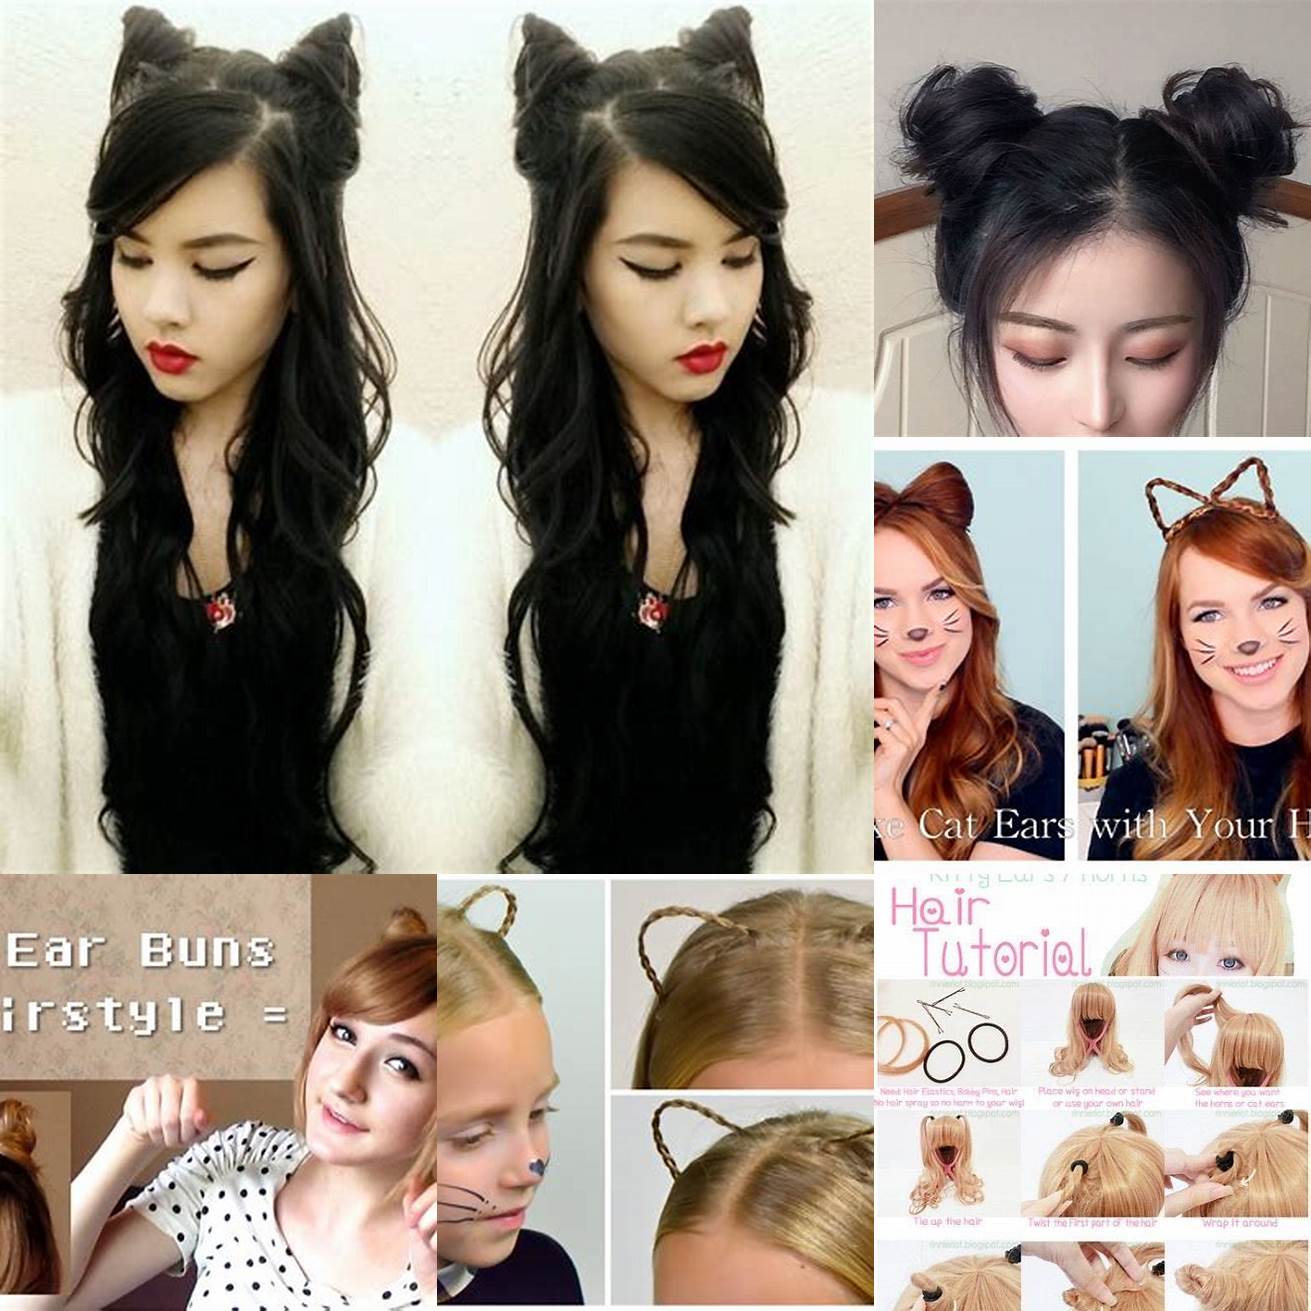 Cat ears with hair worn with a cute bun